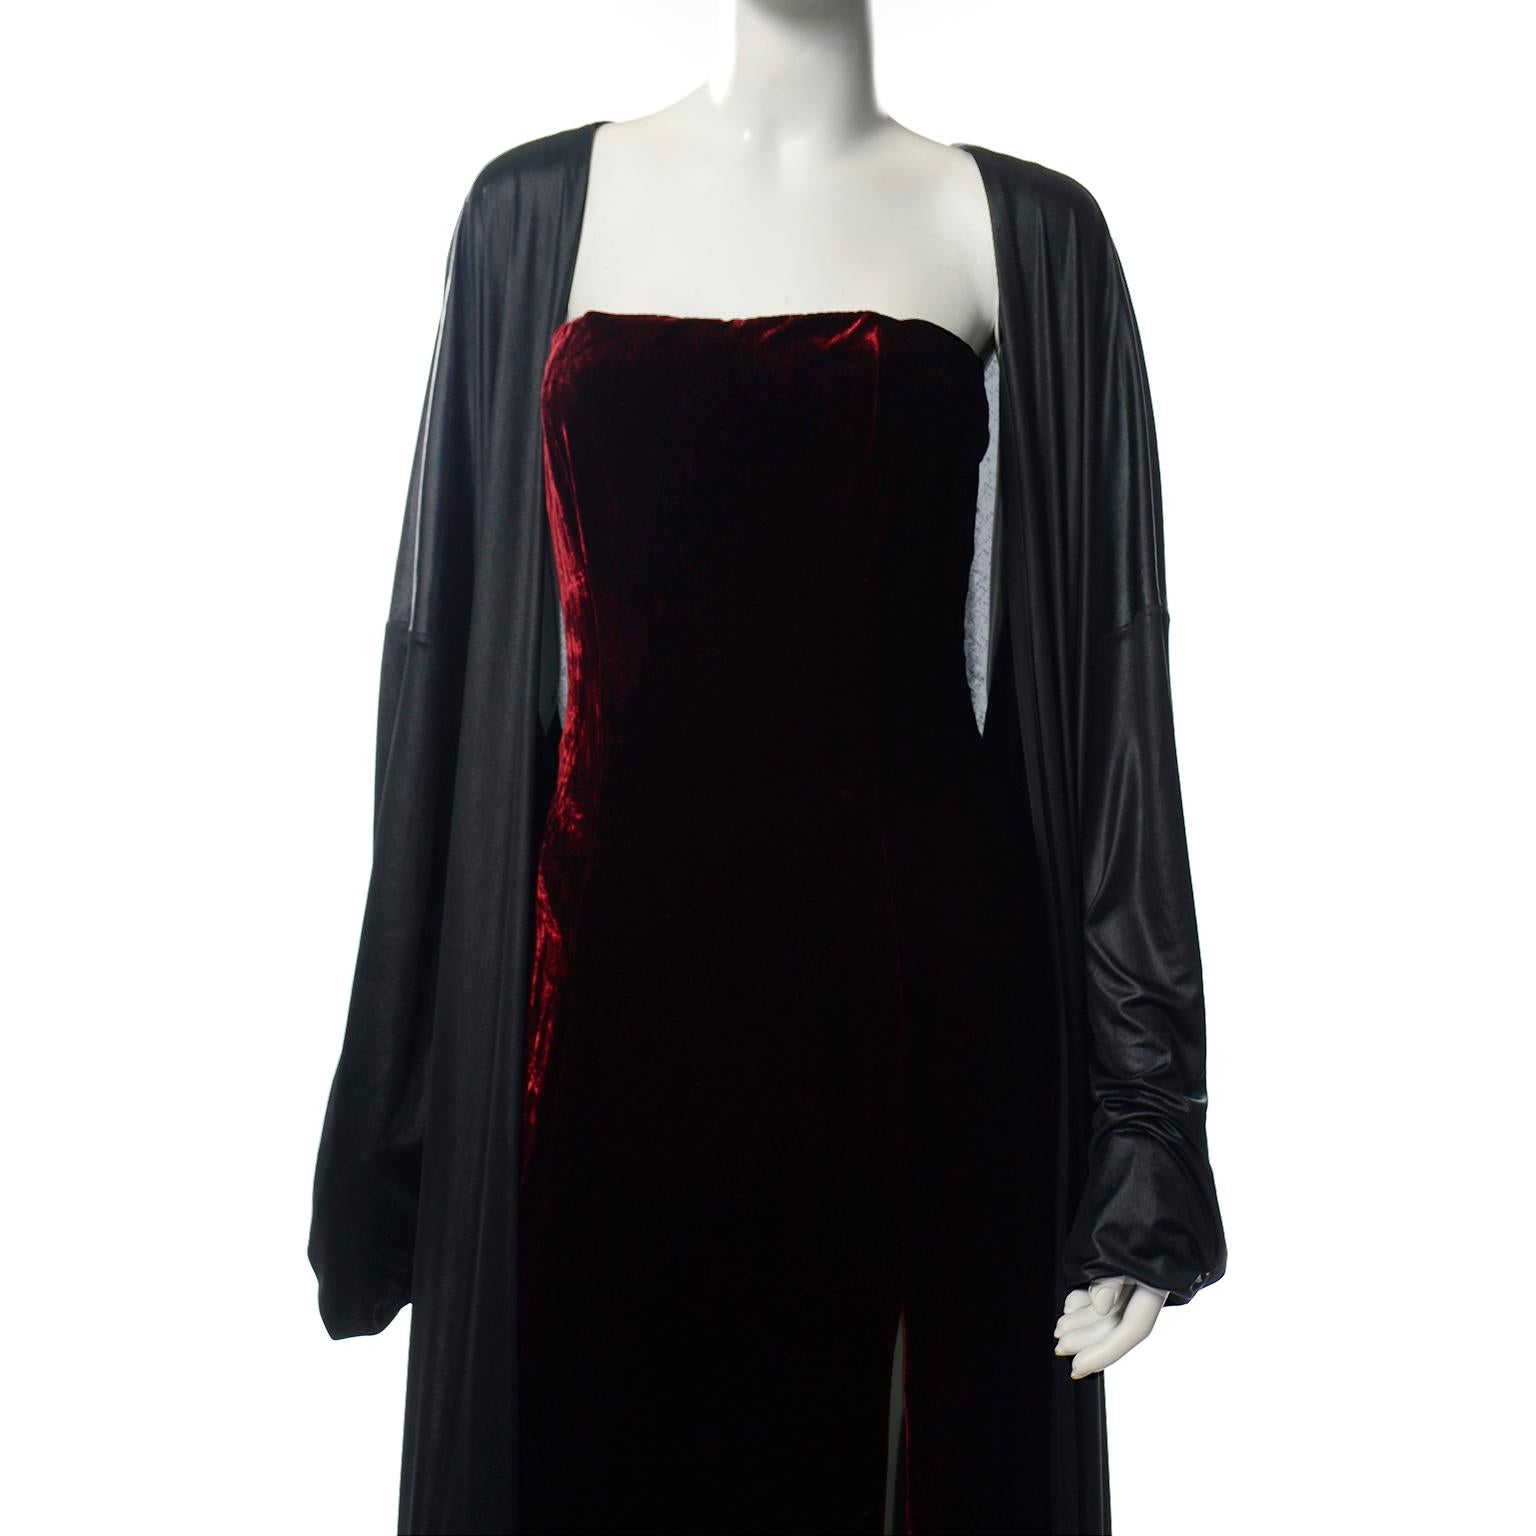 Deadstock Jean Paul Gaultier Red Velvet Evening Dress w Attached Black Coat 9